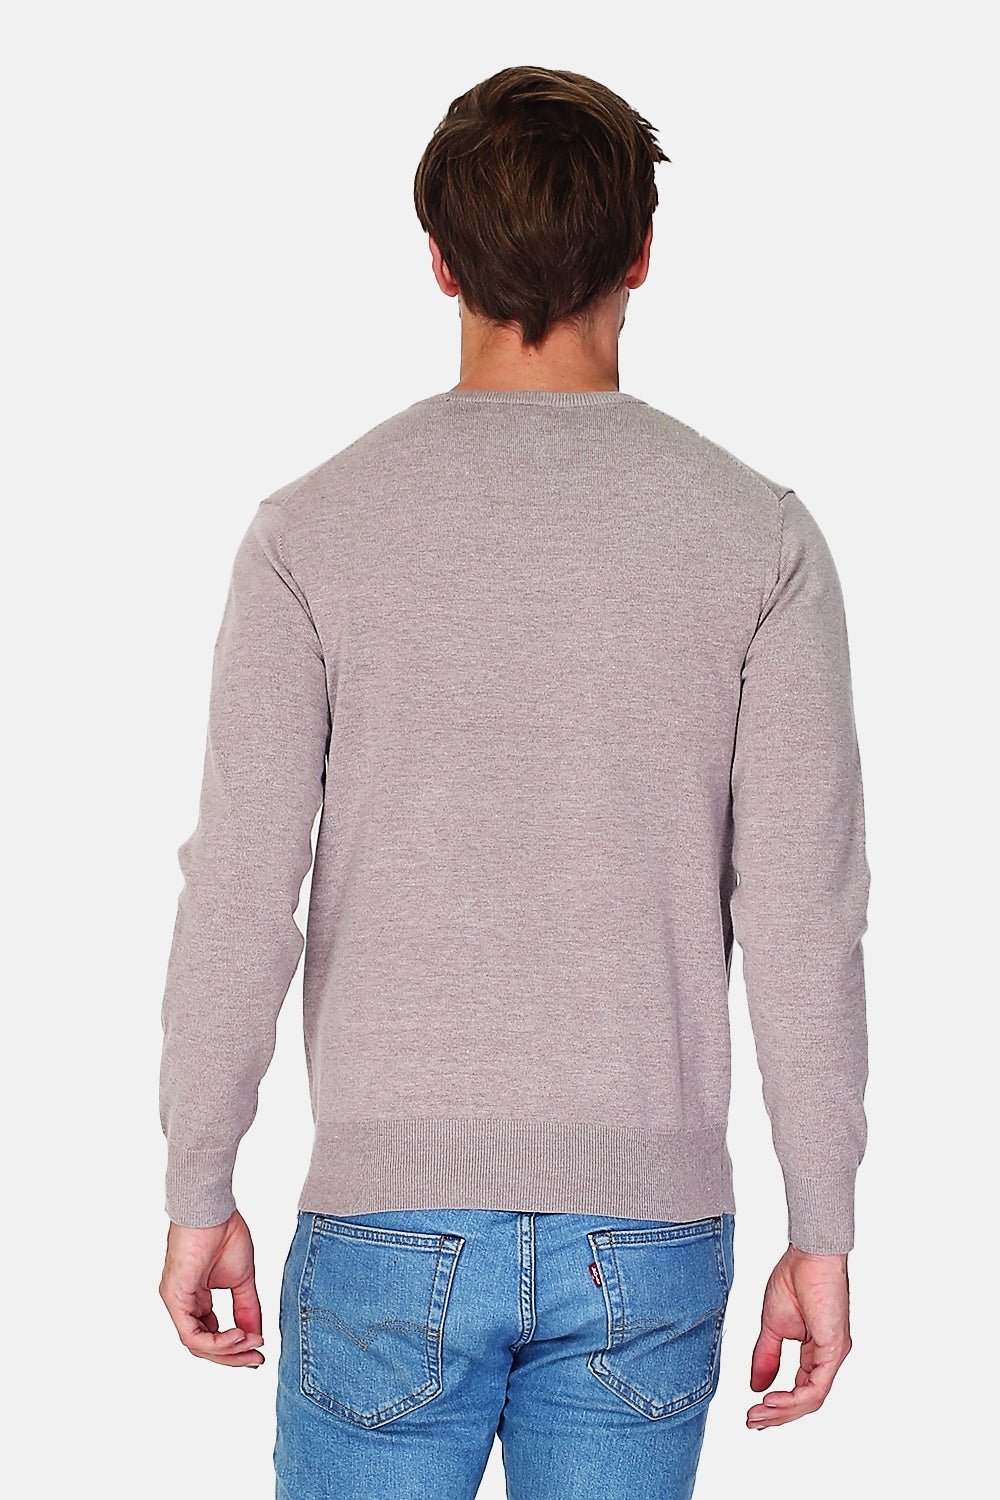 Long sleeve v-neck sweater